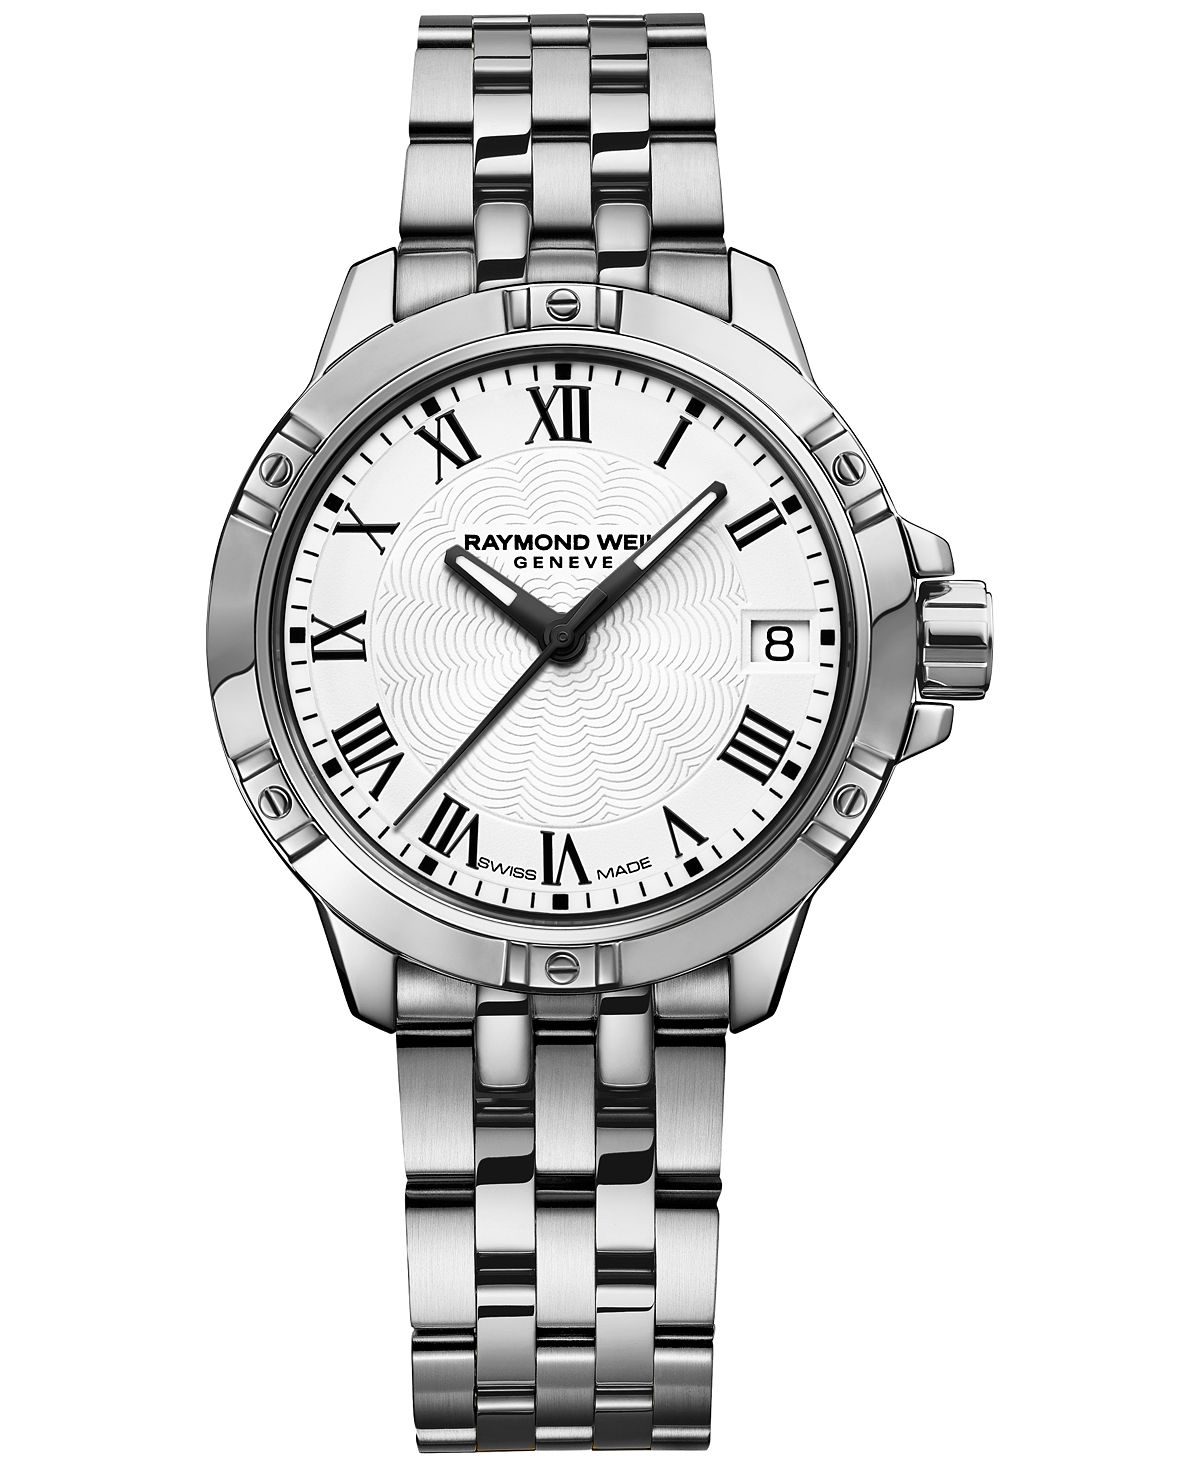 Швейцарские женские часы Tango с браслетом из нержавеющей стали, 30 мм 5960-ST-00300 Raymond Weil, серебро часы raymond weil 5960 st 00300